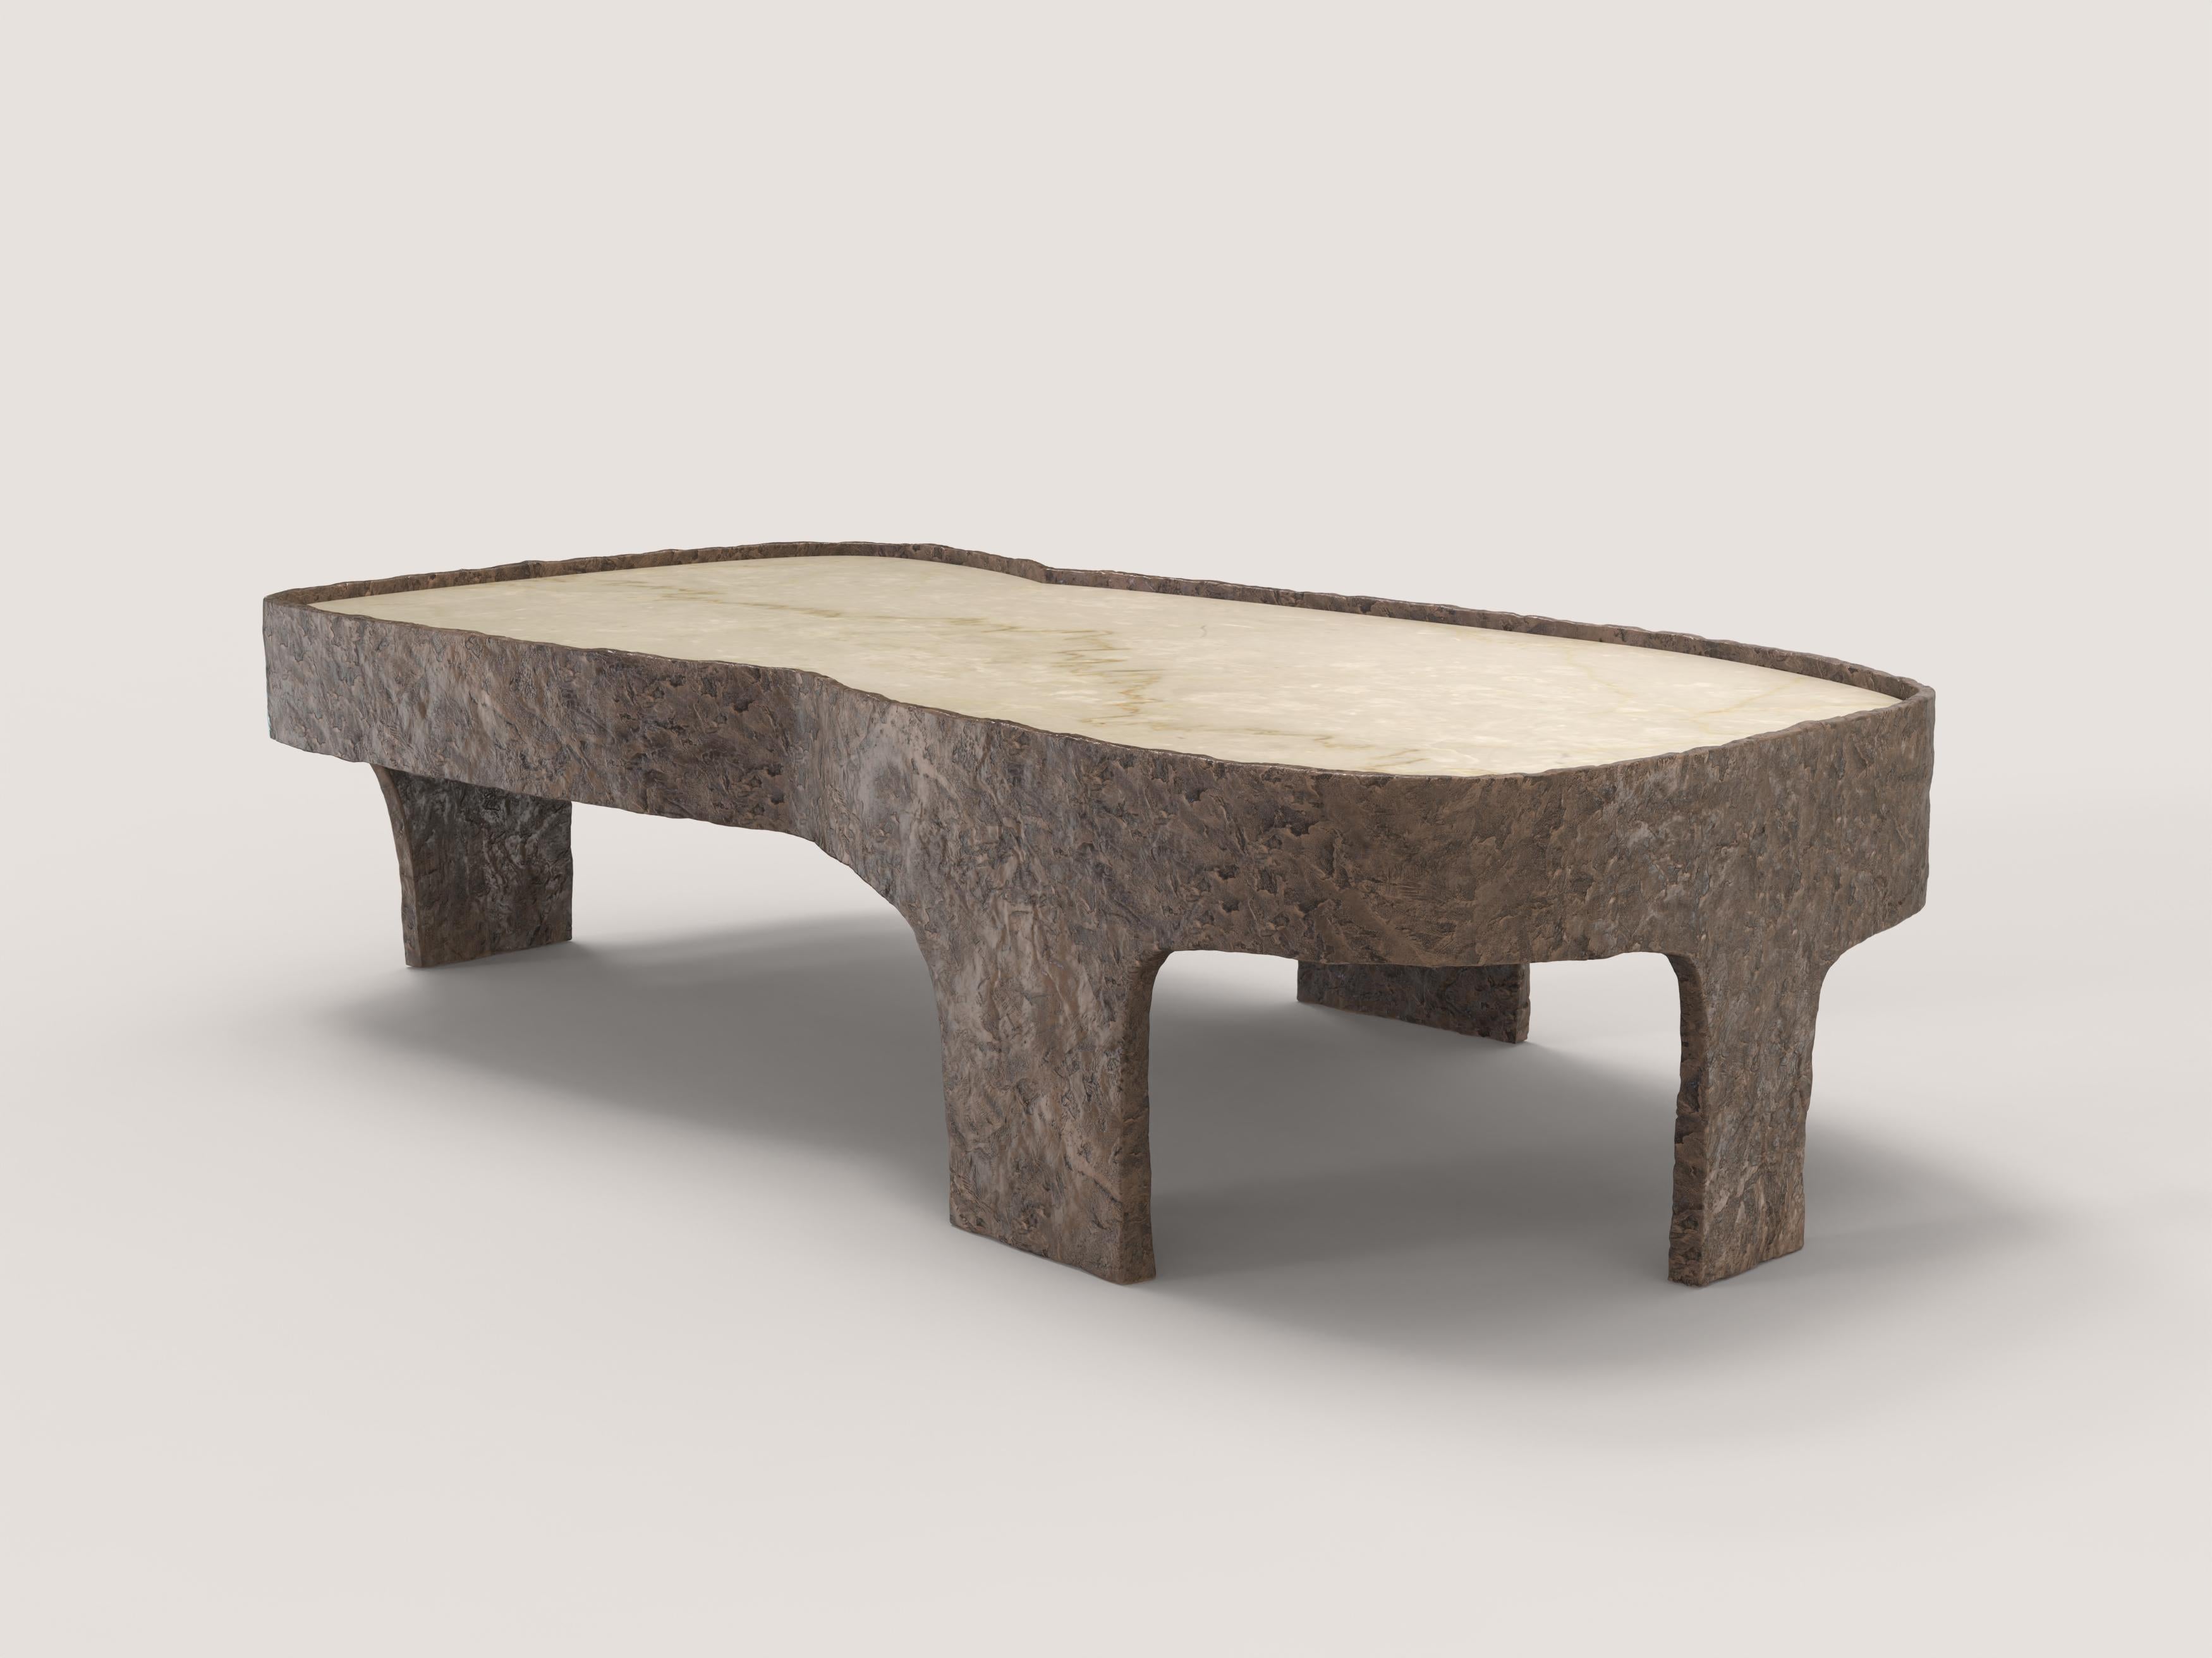 Italian Limited Edition Marble Bronze Table, Sumatra V3 by Edizione Limitata For Sale